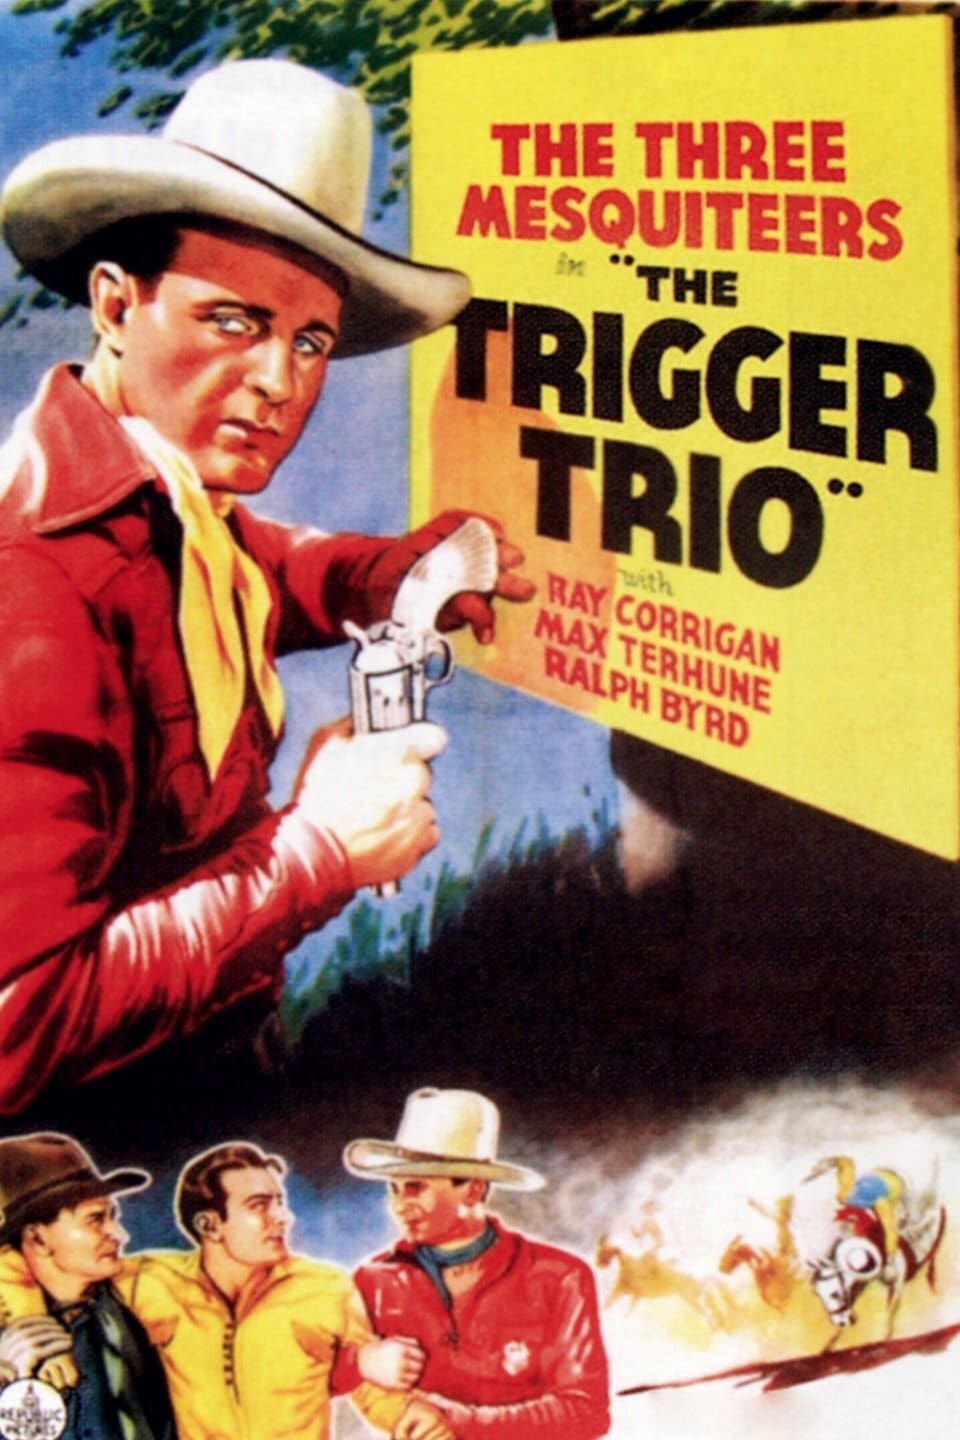 The Trigger Trio (1937)